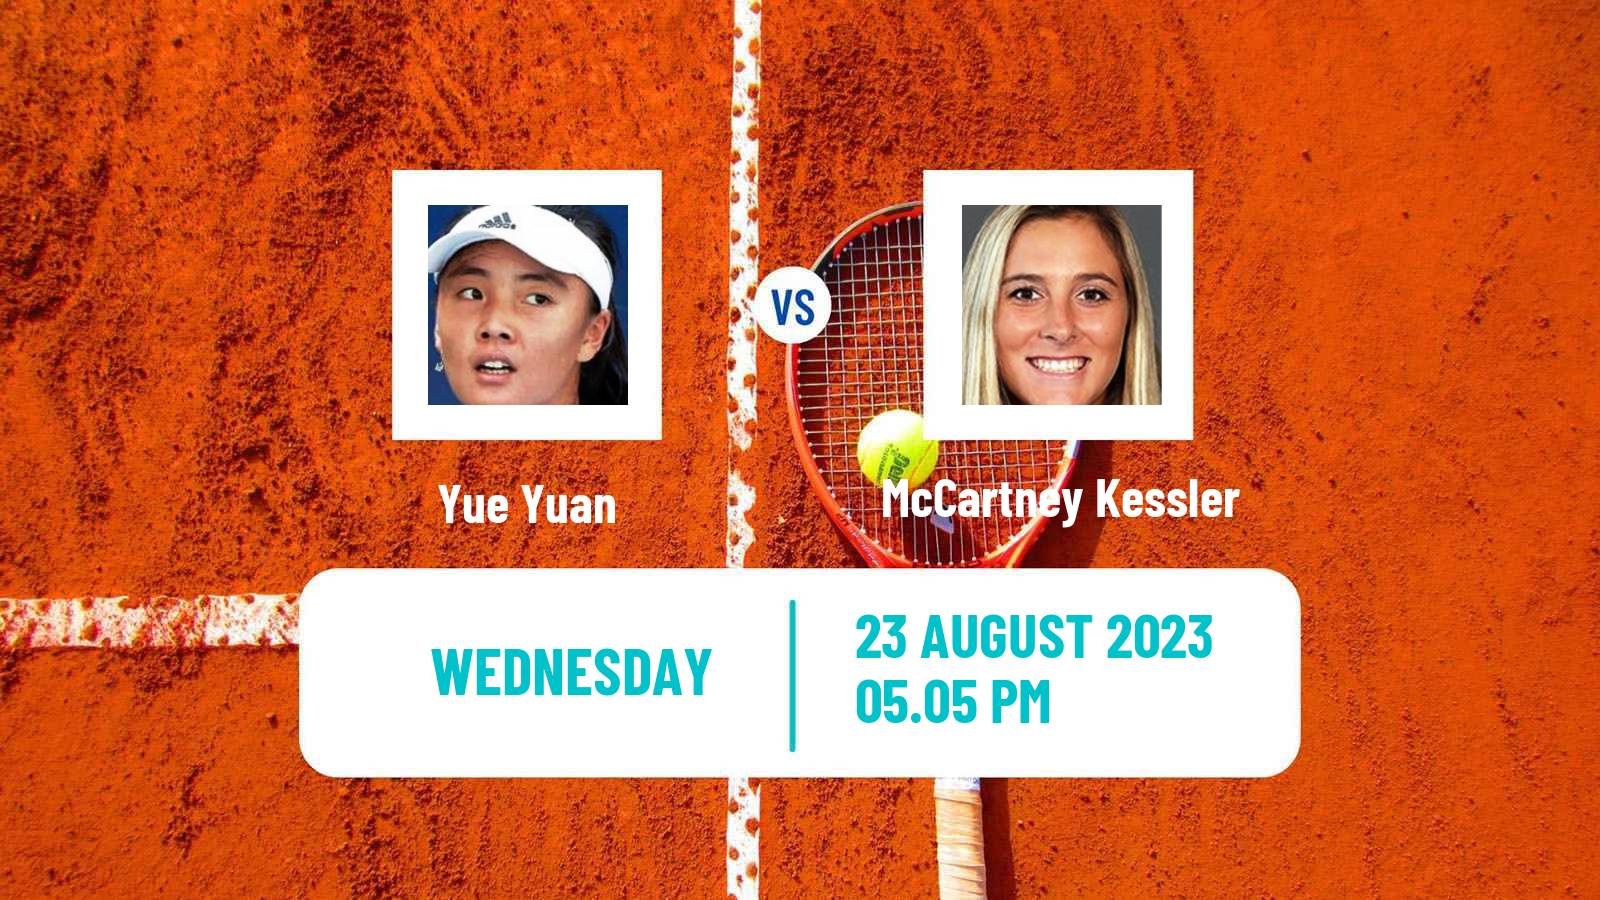 Tennis WTA US Open Yue Yuan - McCartney Kessler